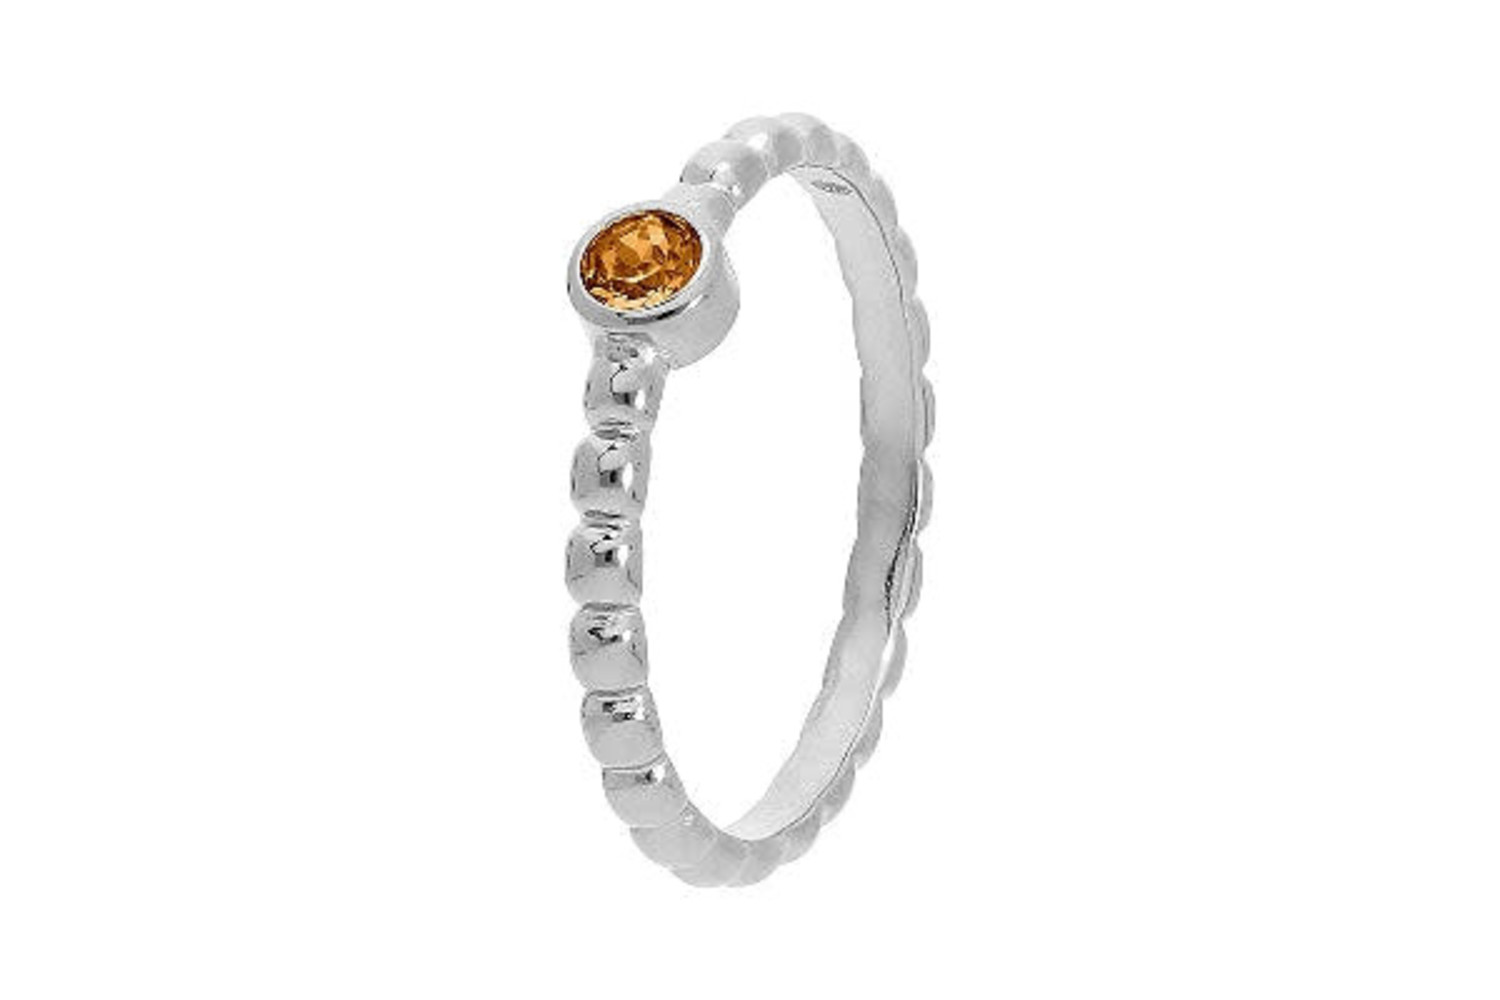 Spacer Ring Sarria - Gold – QUDO USA